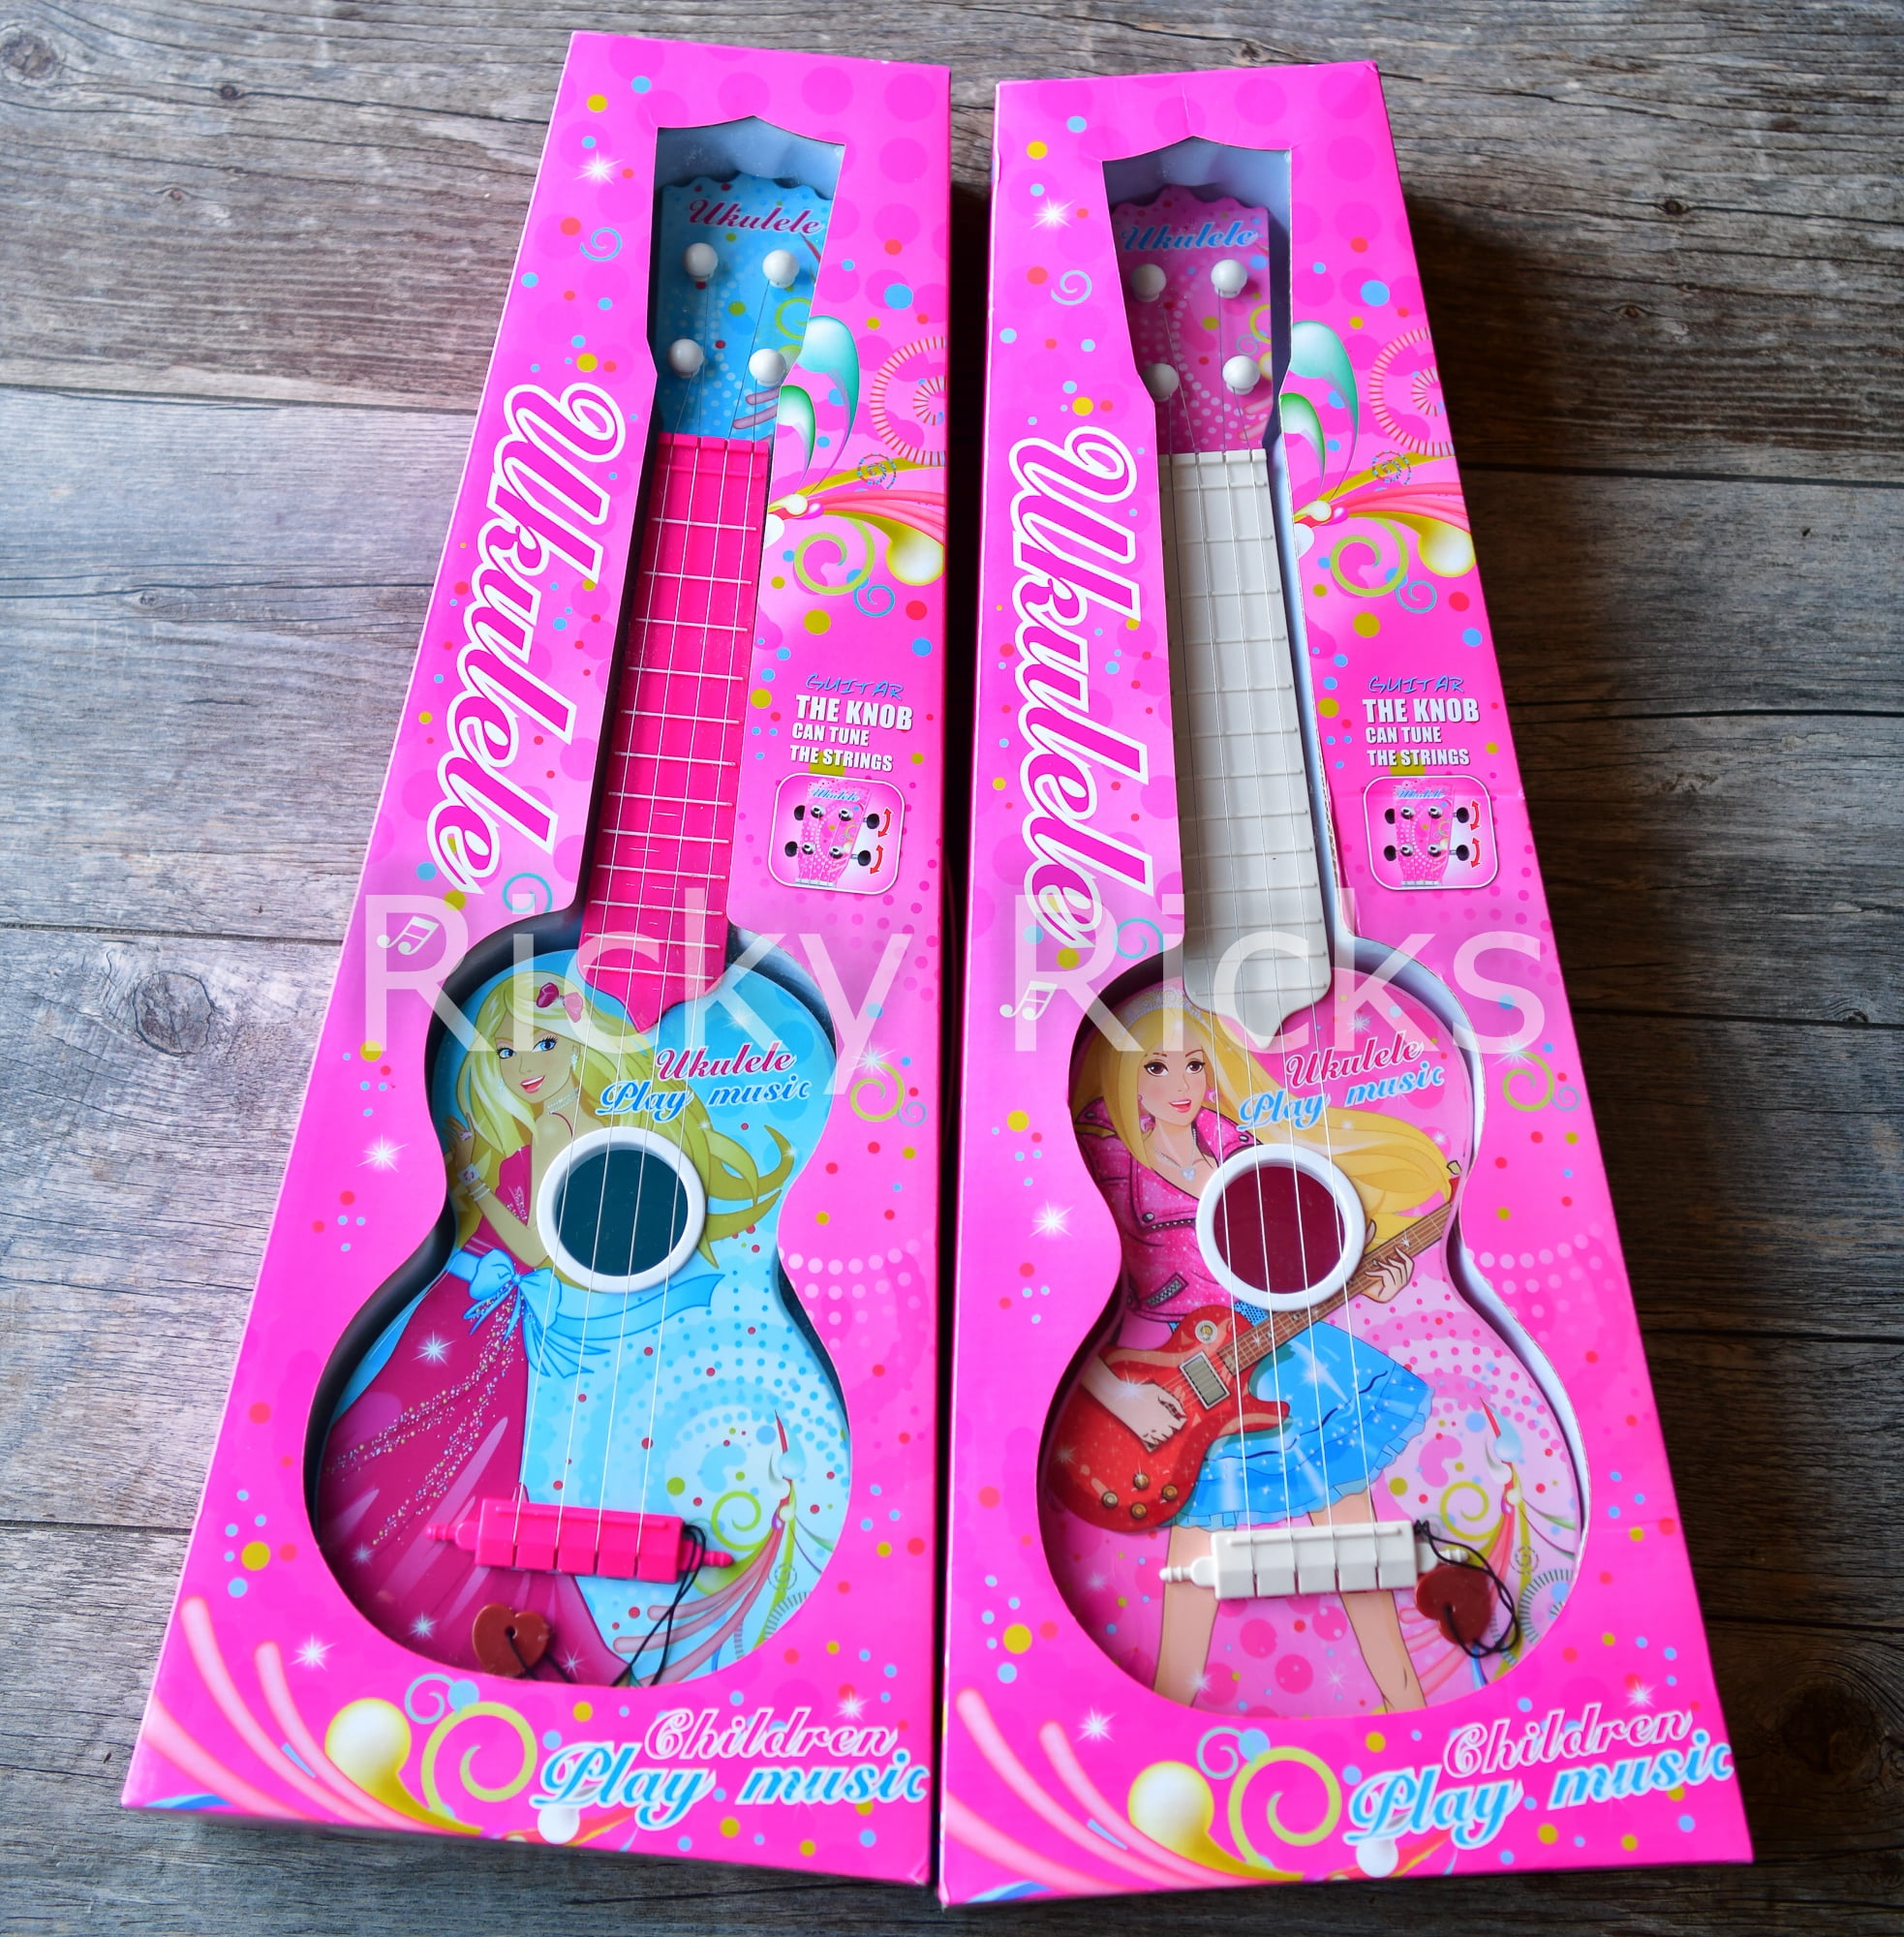 Hape E0600 Flower Power 60s Themed Kids Wooden Toy Guitar Musical Instrument for sale online 